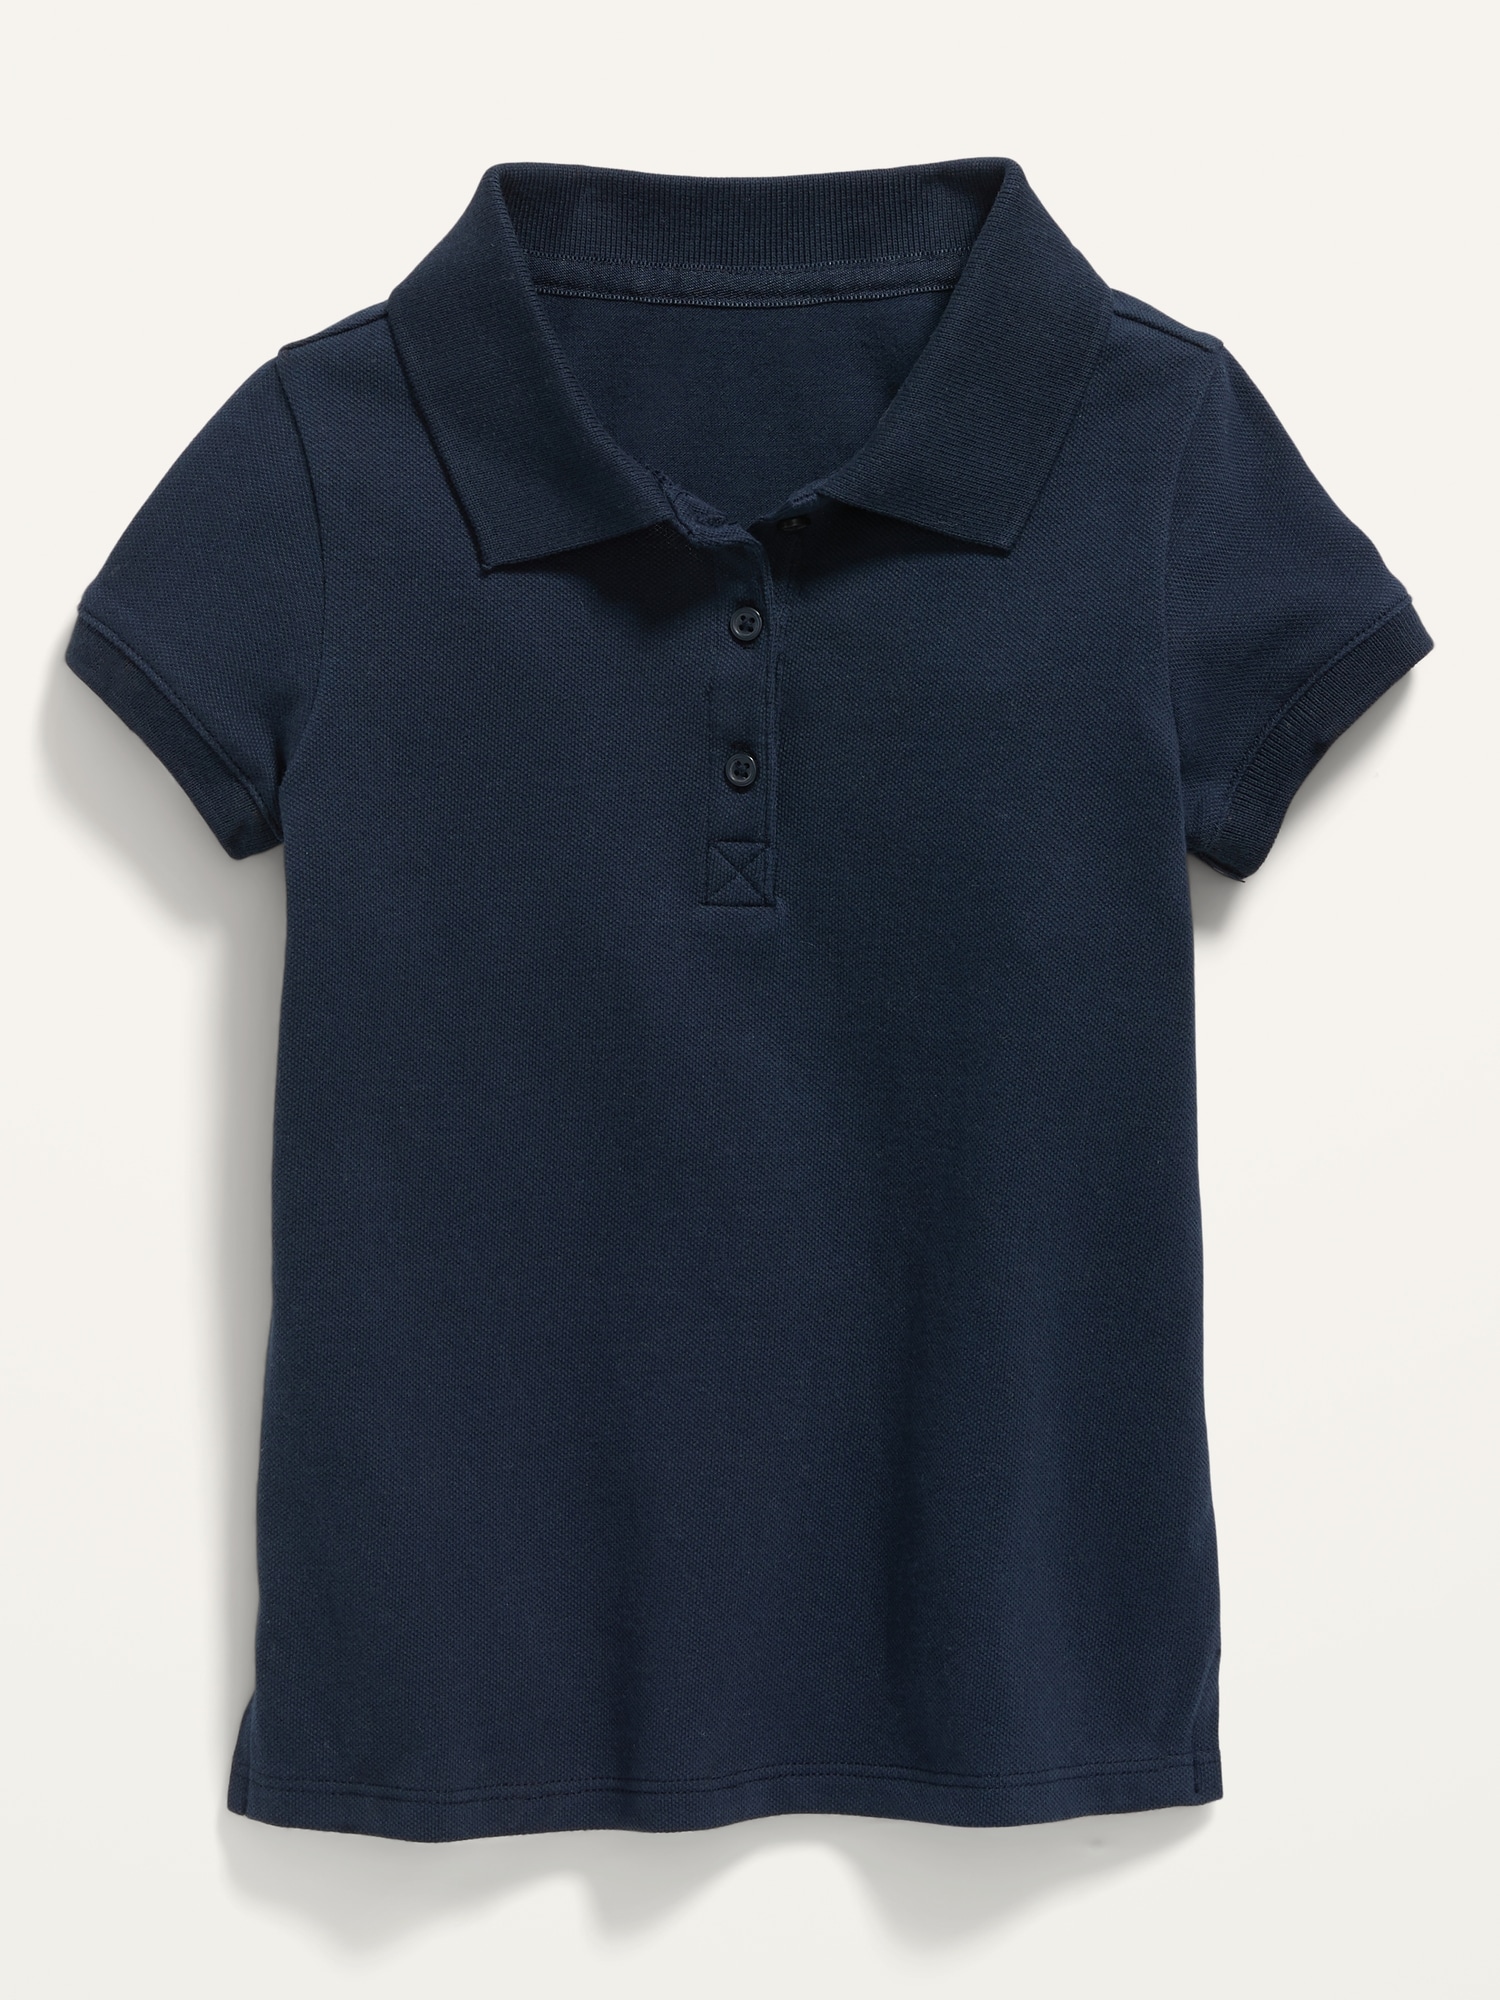 Uniform Short-Sleeve Pique Polo for Toddler Girls